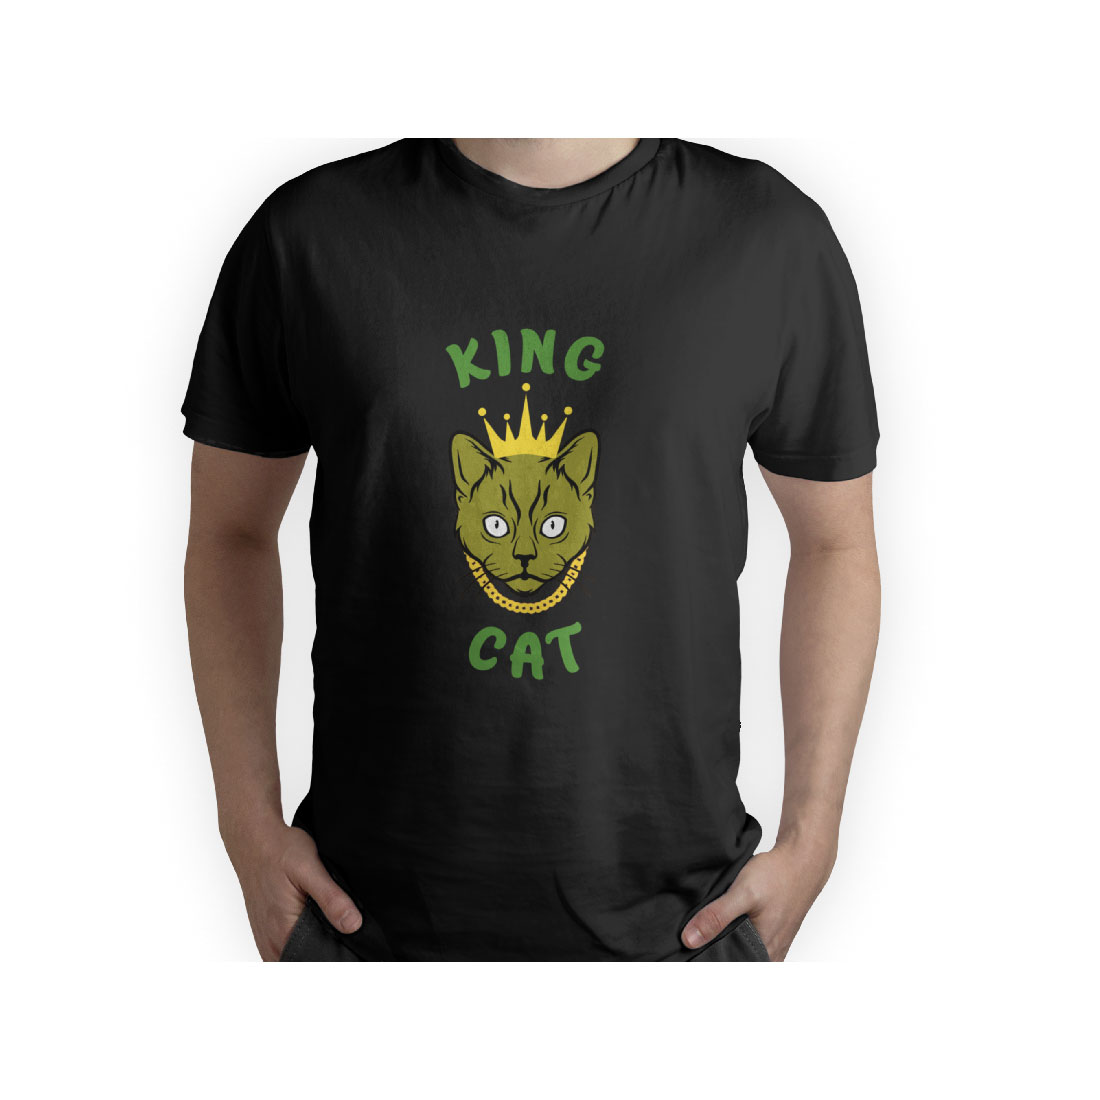 5 Vintage T-Shirt's Design Collection in Just $20, king cat on black design.